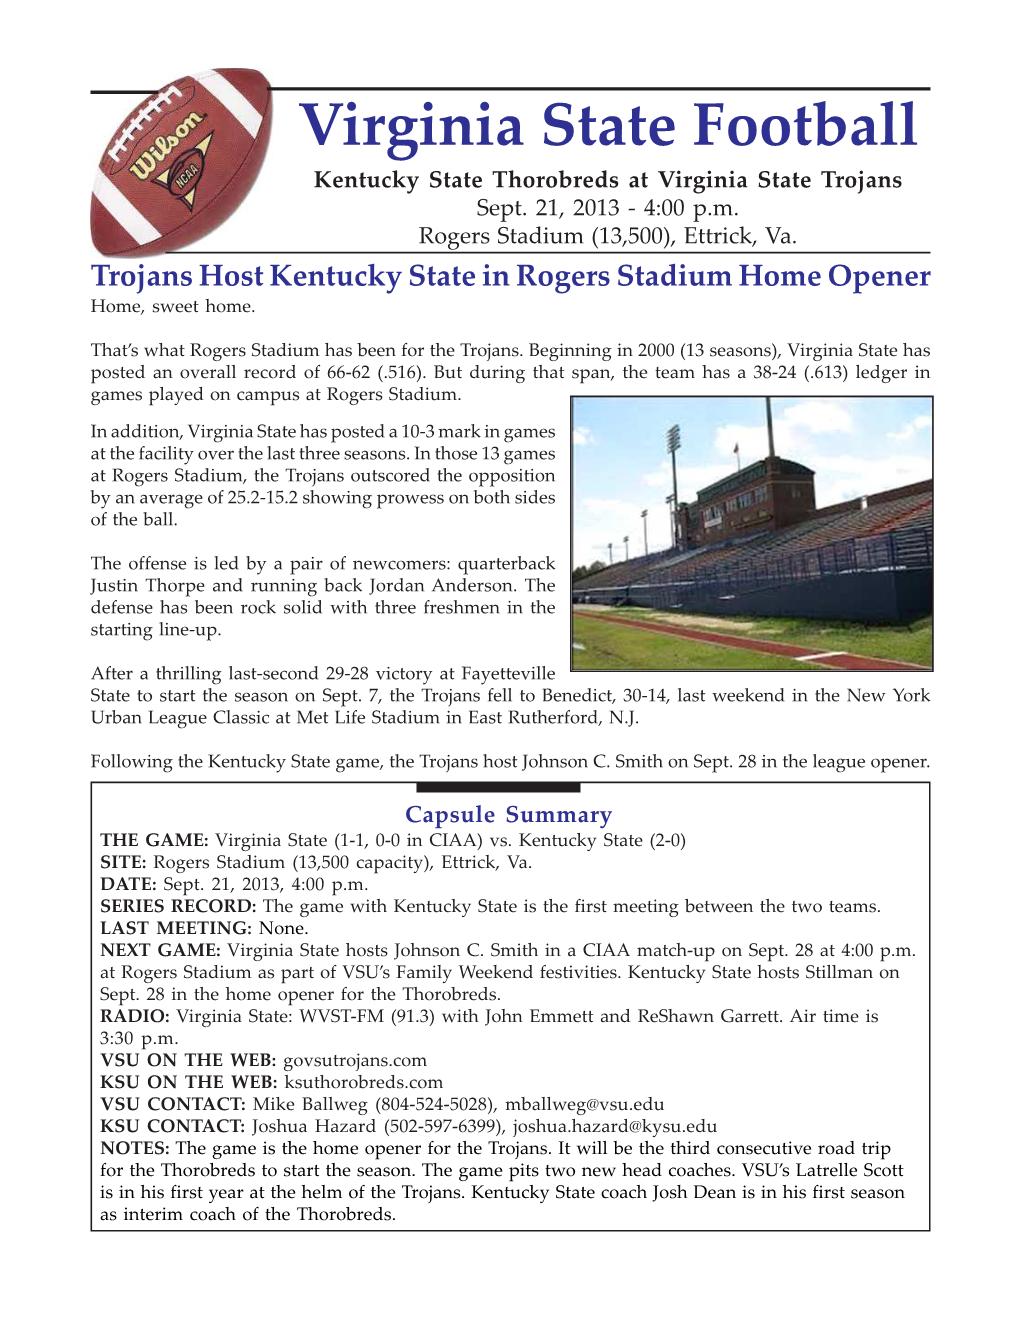 Virginia State Football Kentucky State Thorobreds at Virginia State Trojans Sept